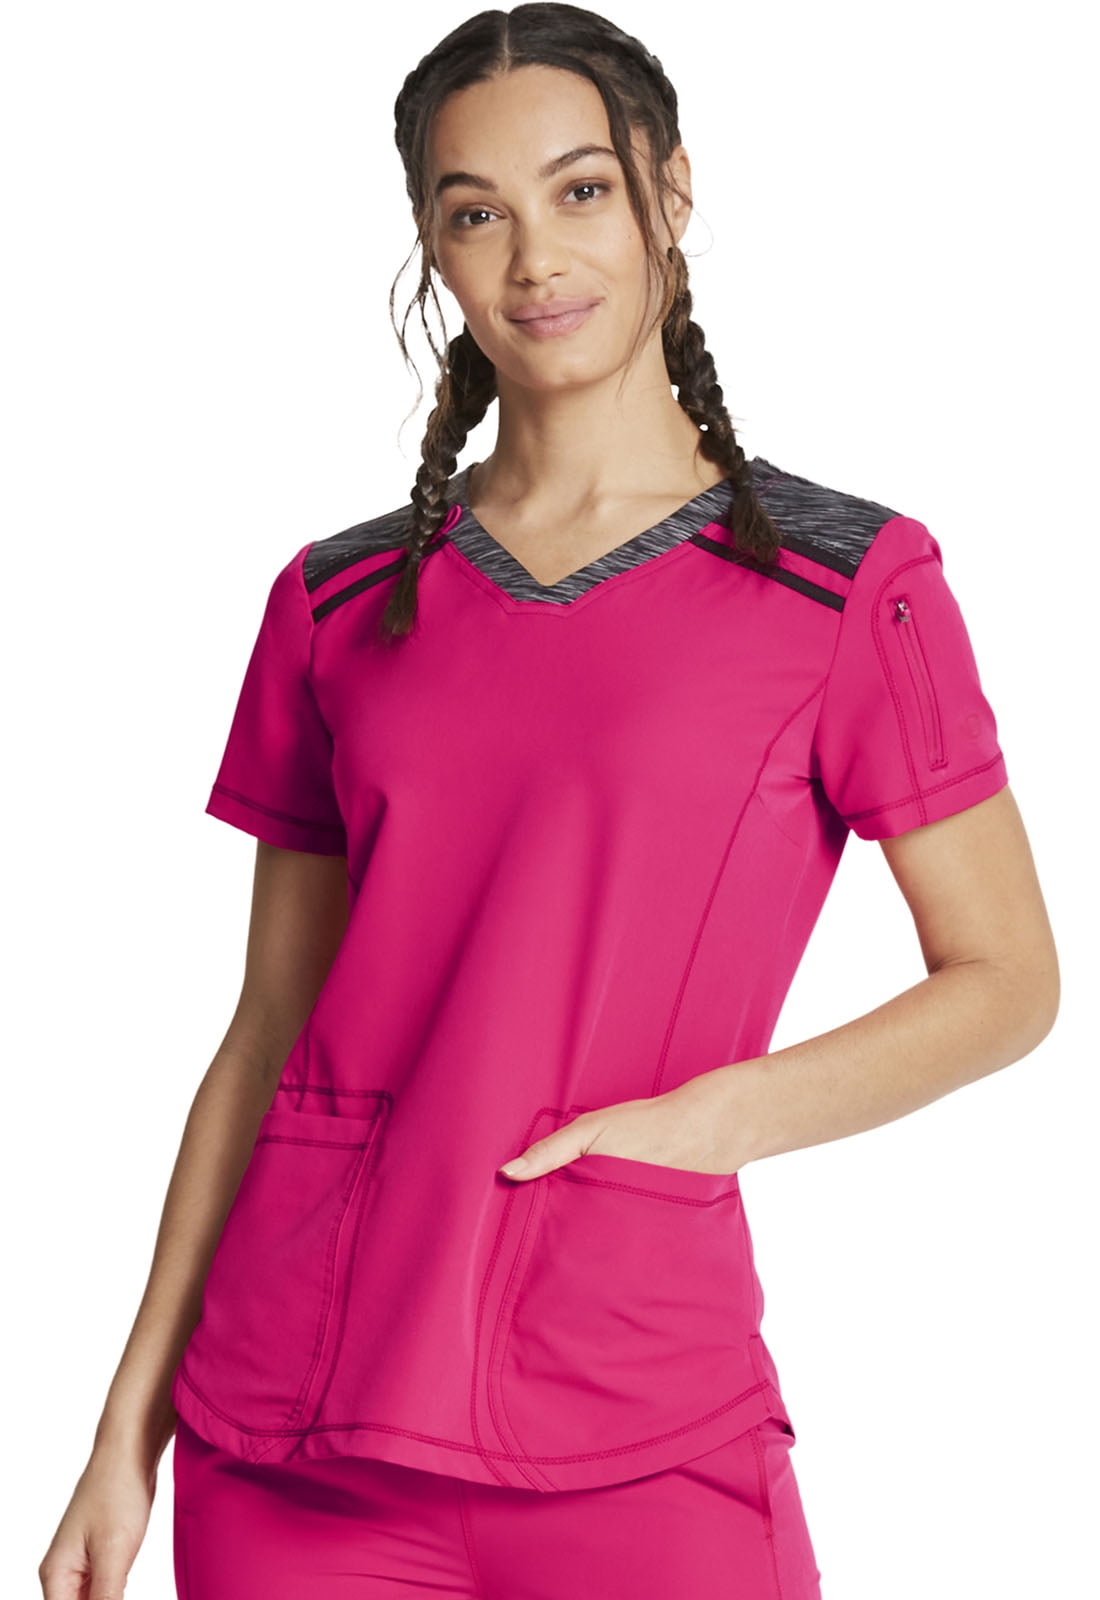 DICKIES Healthcare T Shirt Scrub Nurse Medical Uniform Red Pink Black White Blue 